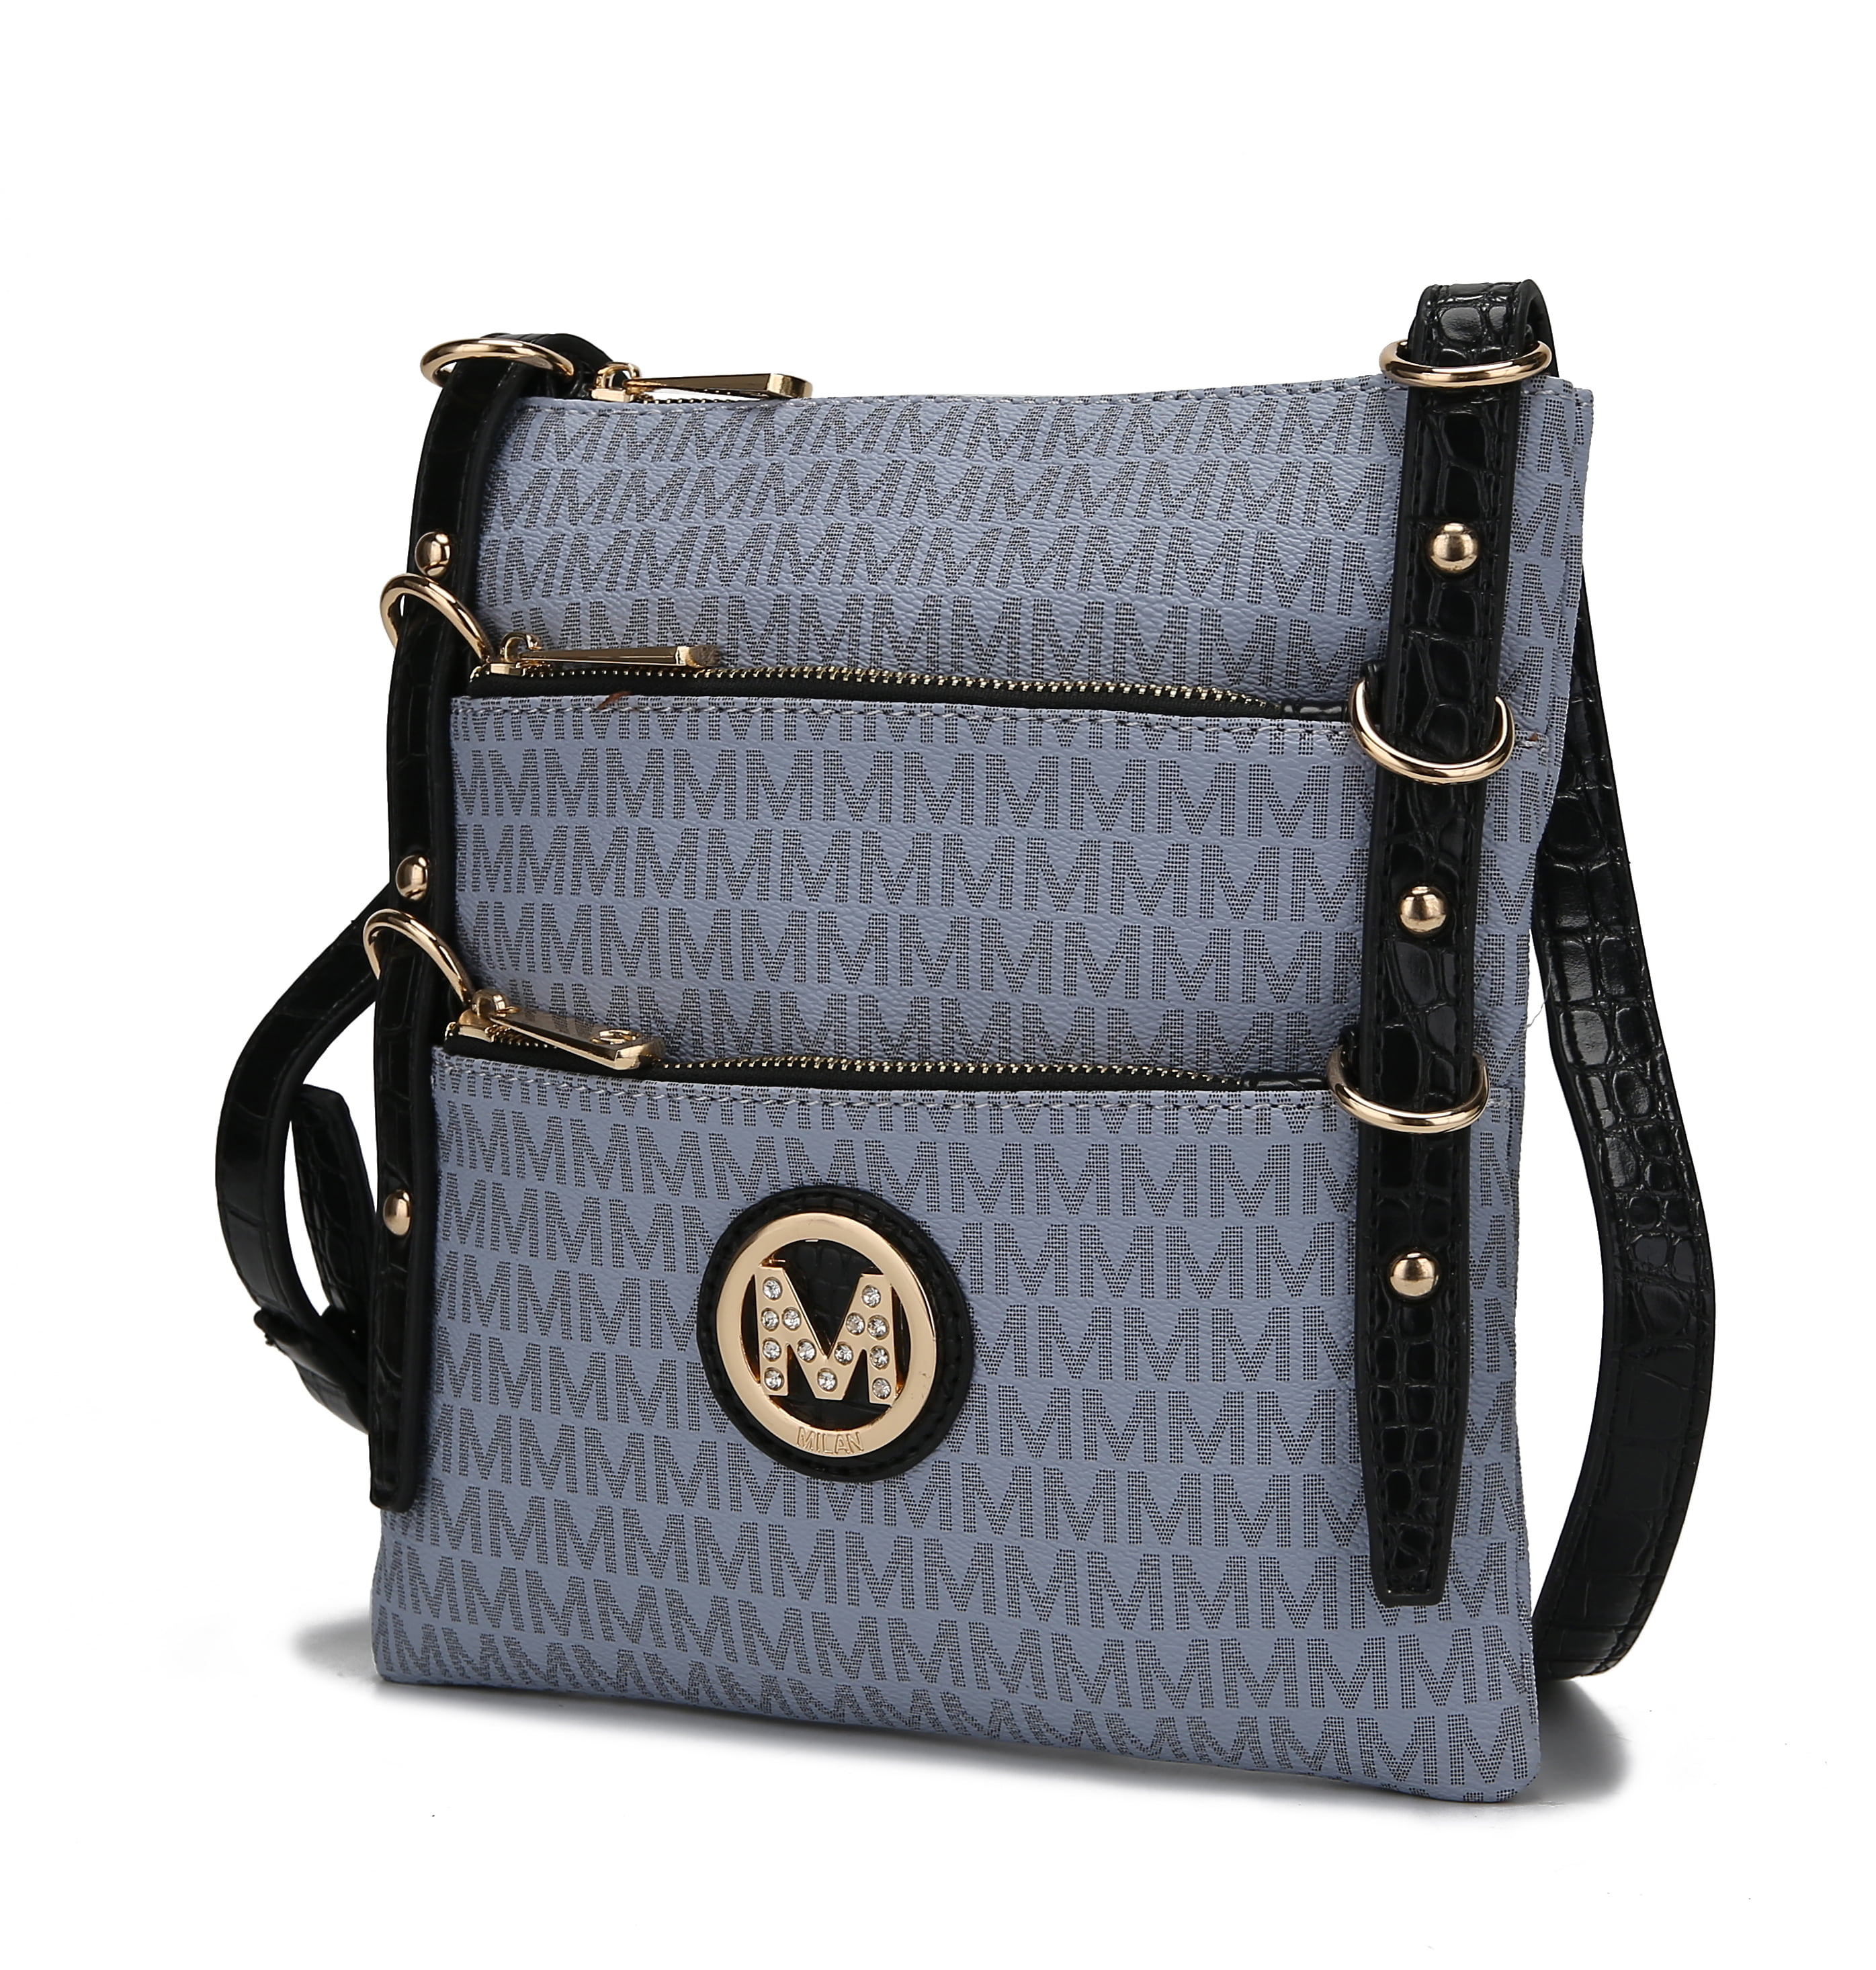 Details about   Women Faux Leather Handbag Medium Multi Pocket Cross Body Bag Shoulder Handbag S 